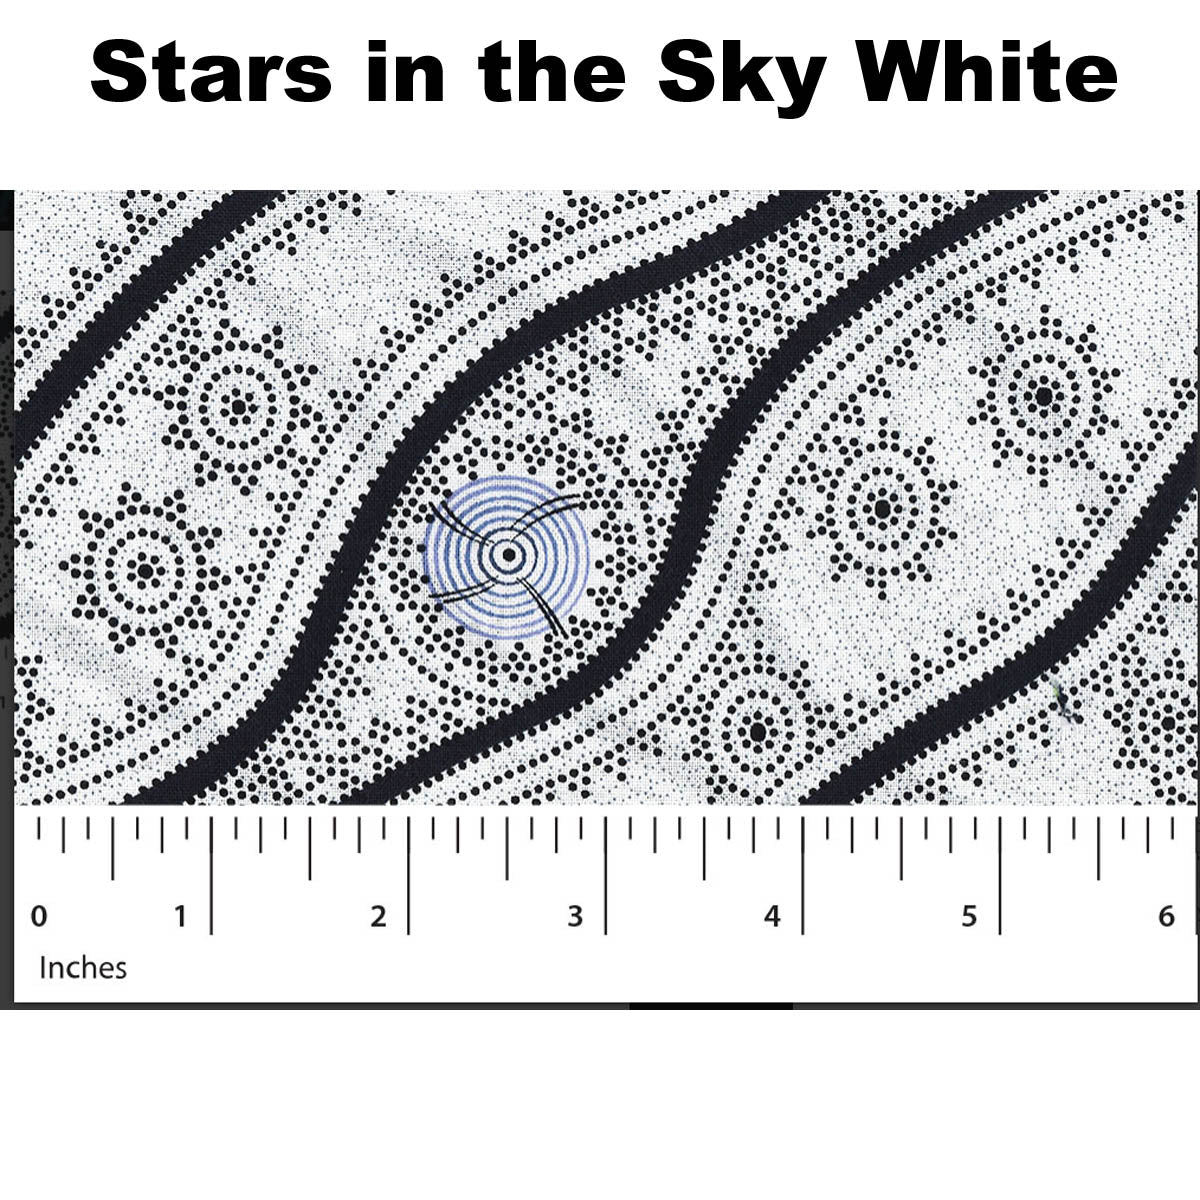 STARS IN THE SKY WHITE by Australian Aboriginal Artist Geraldine Riley